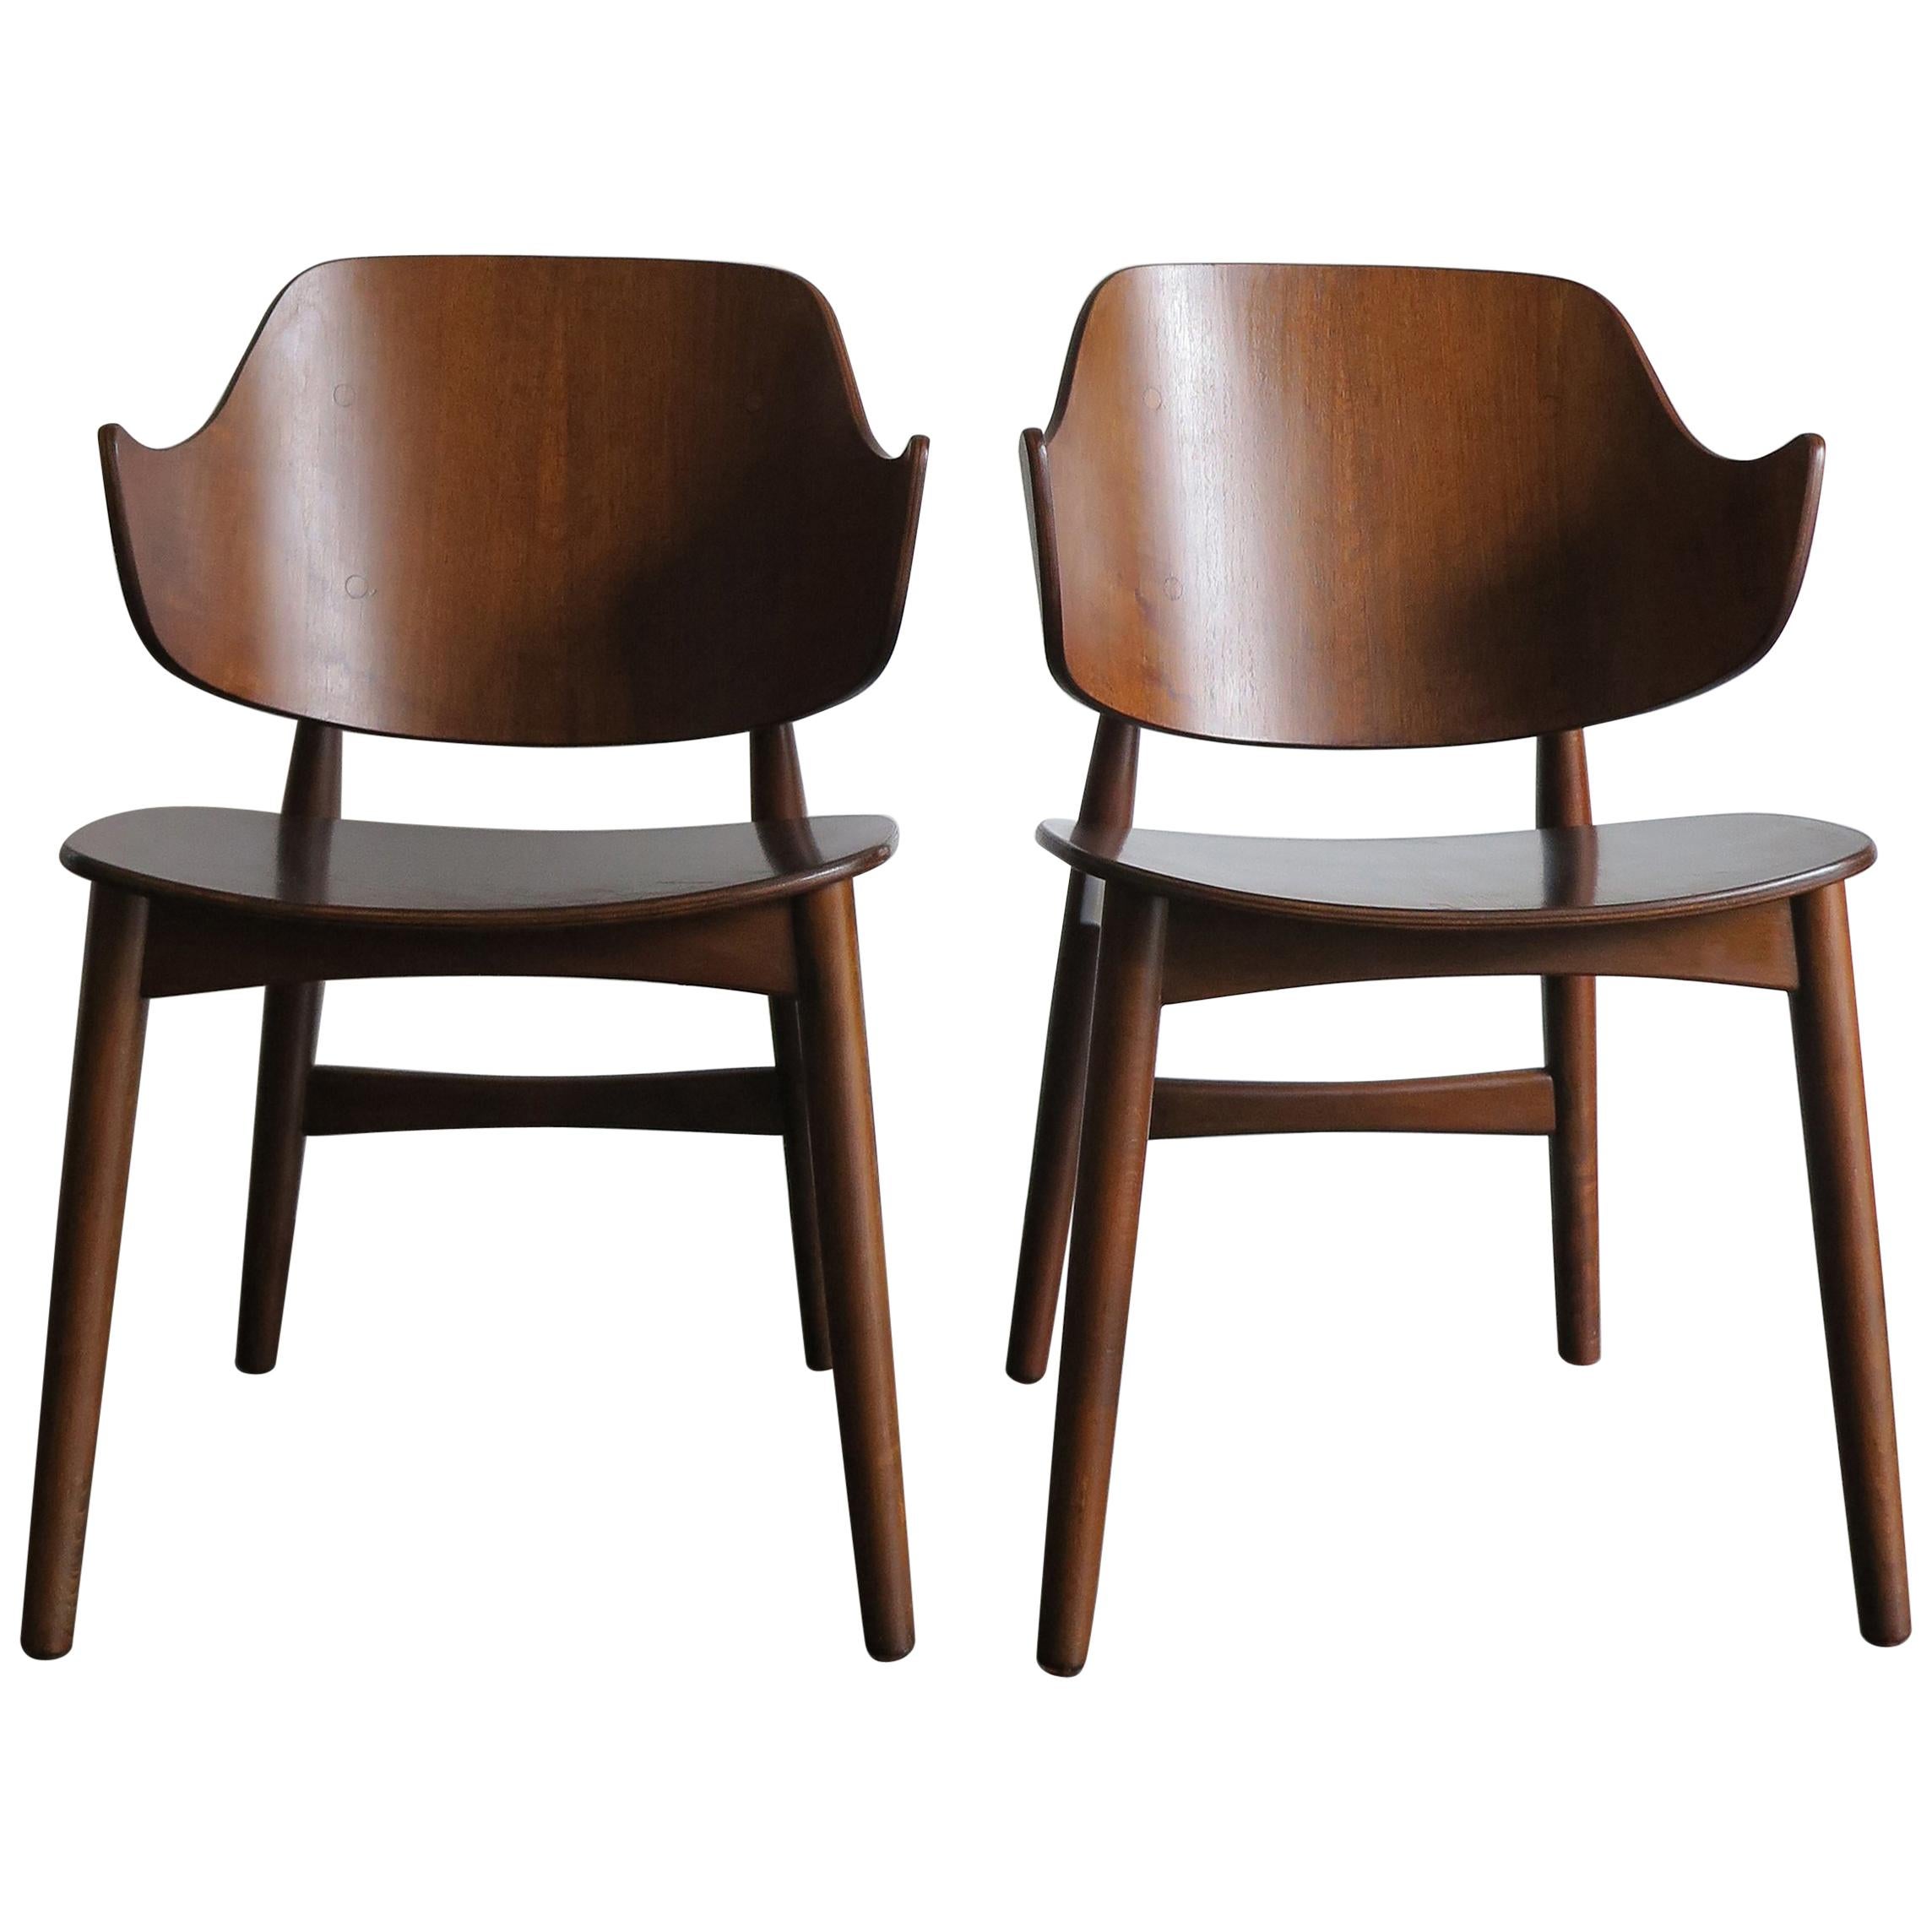 Jens Hjorth Scandinavian Midcentury Modern Wood Chairs Armchairs, 1950s